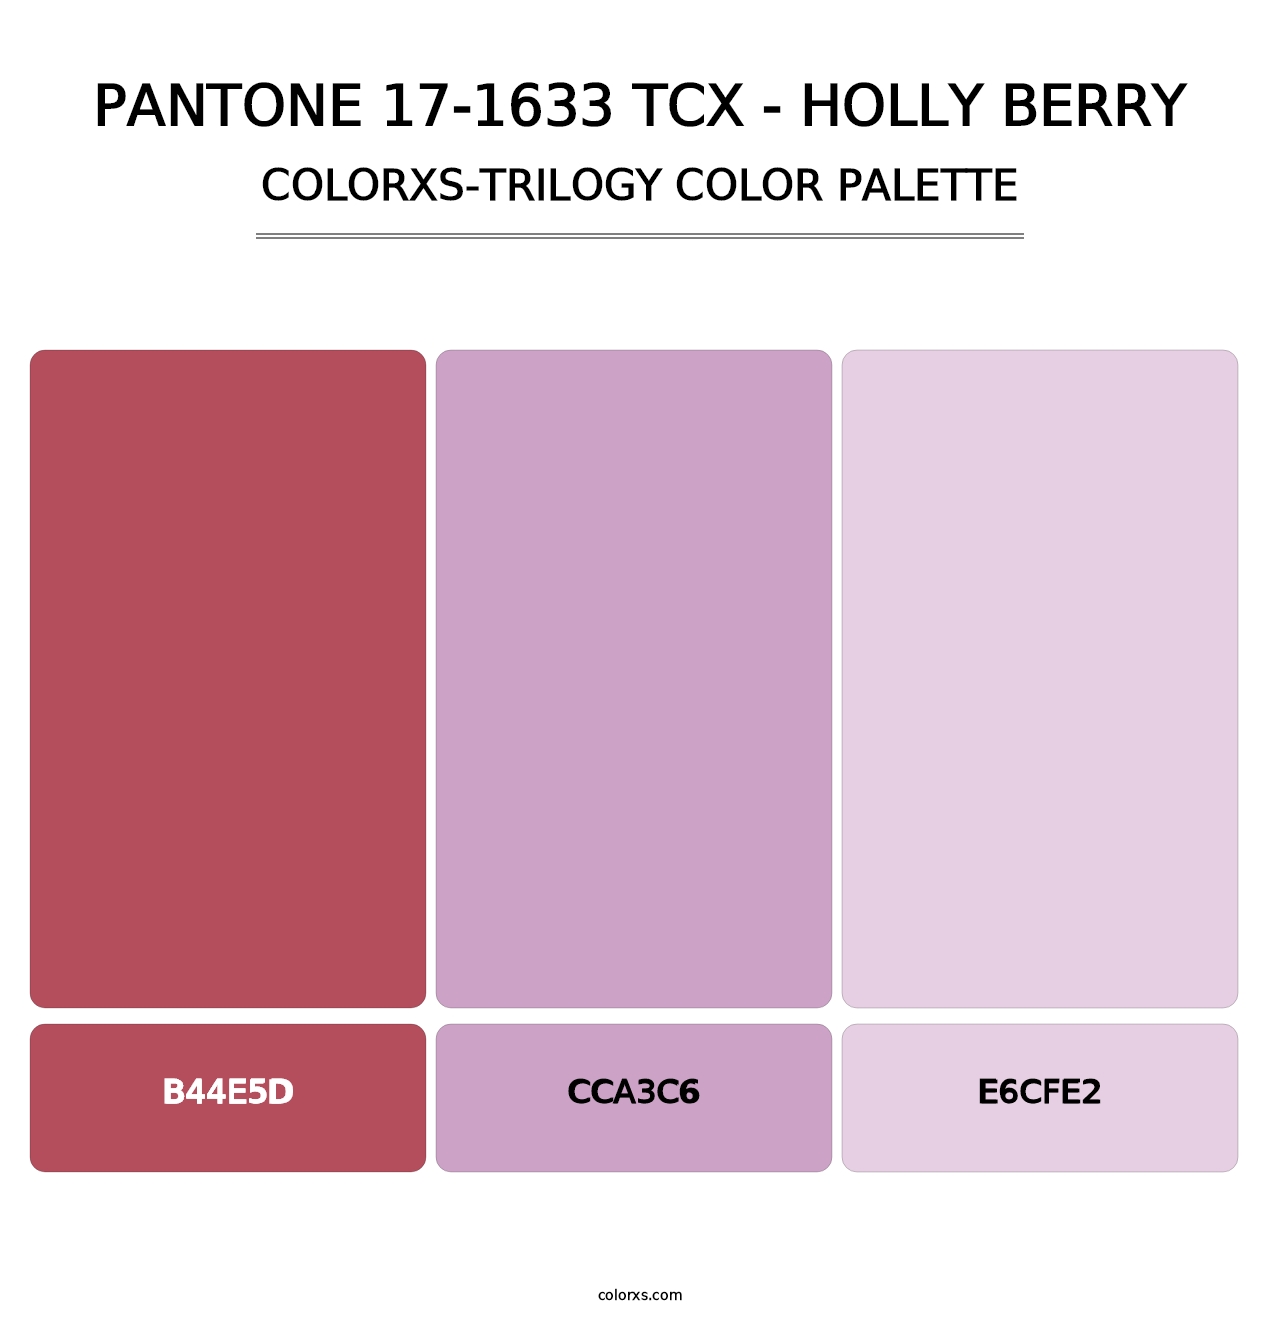 PANTONE 17-1633 TCX - Holly Berry - Colorxs Trilogy Palette